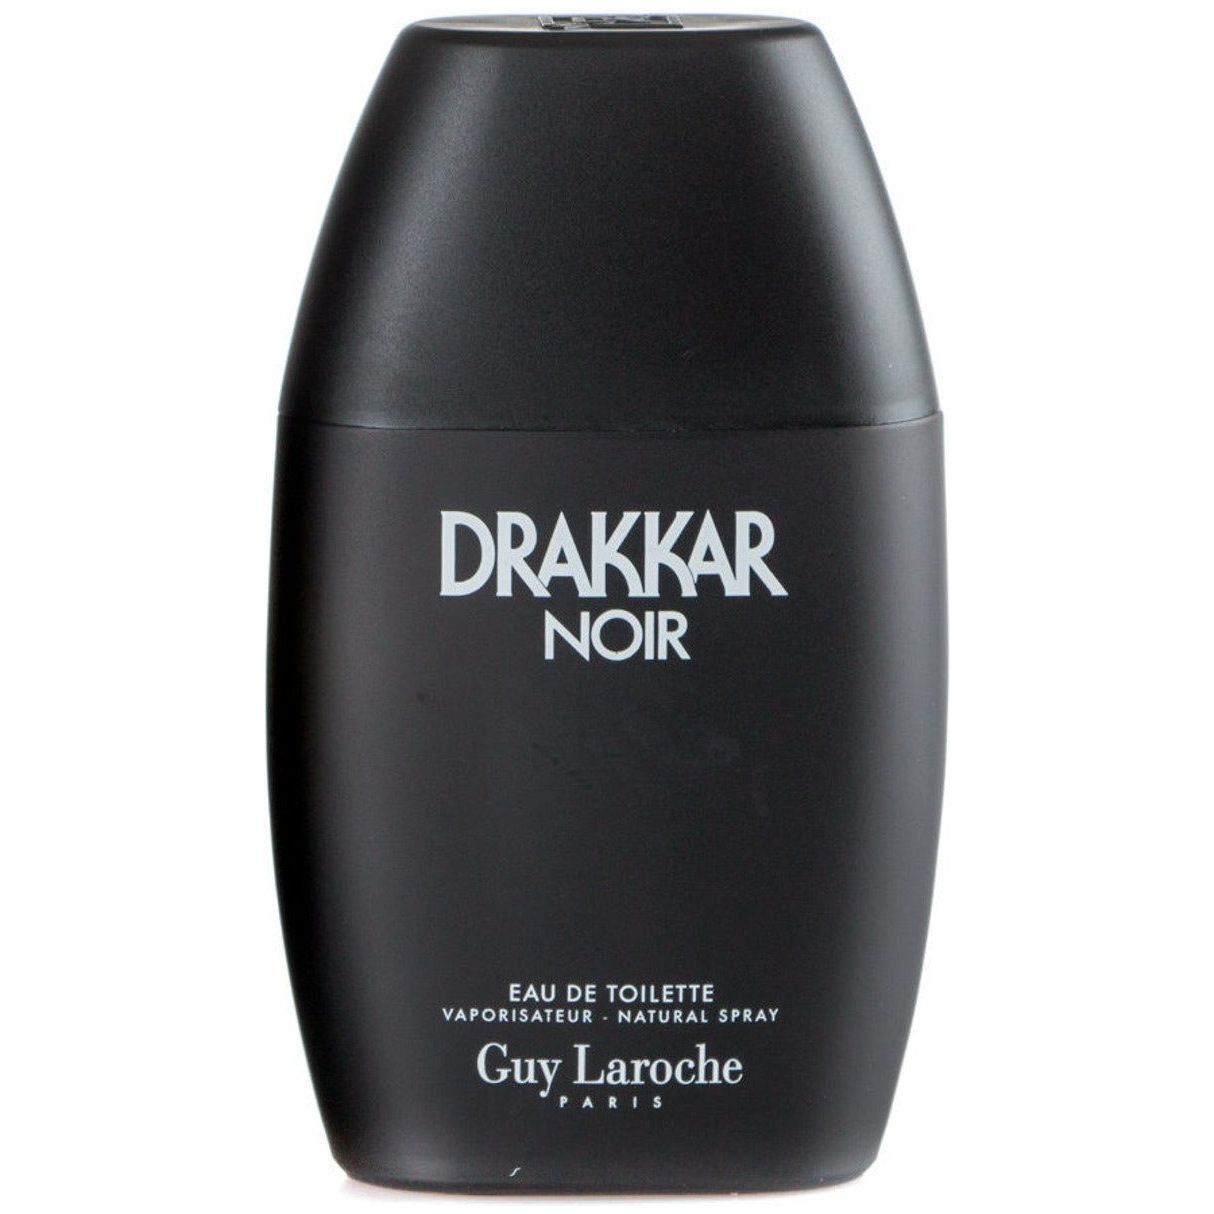 DRAKKAR NOIR by Guy Laroche 6.7 oz / 6.8 oz Cologne New damaged box